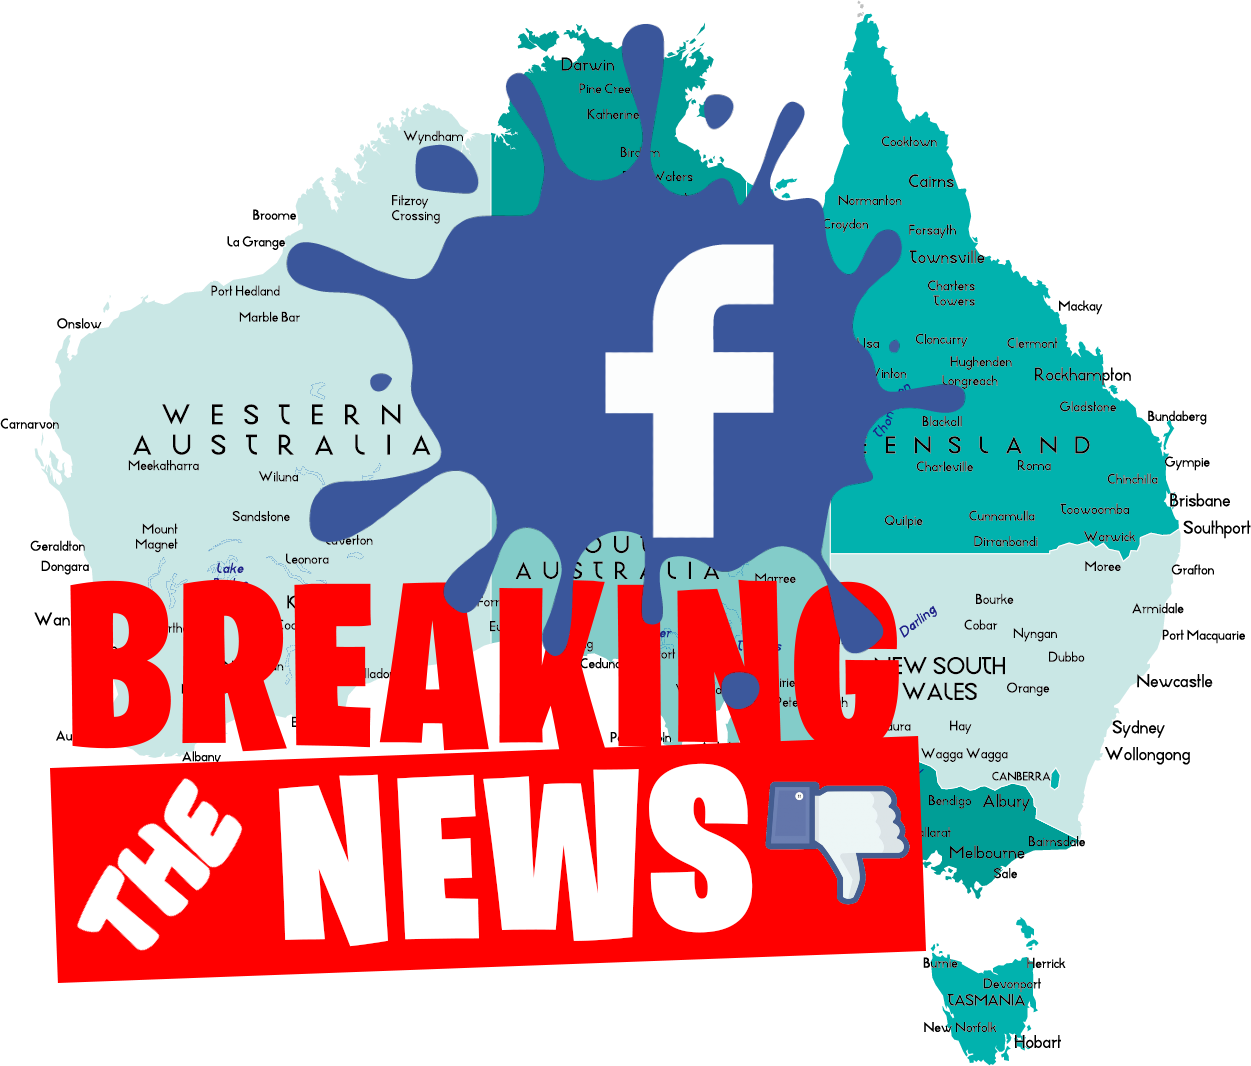 FB Breaks the News in Australia